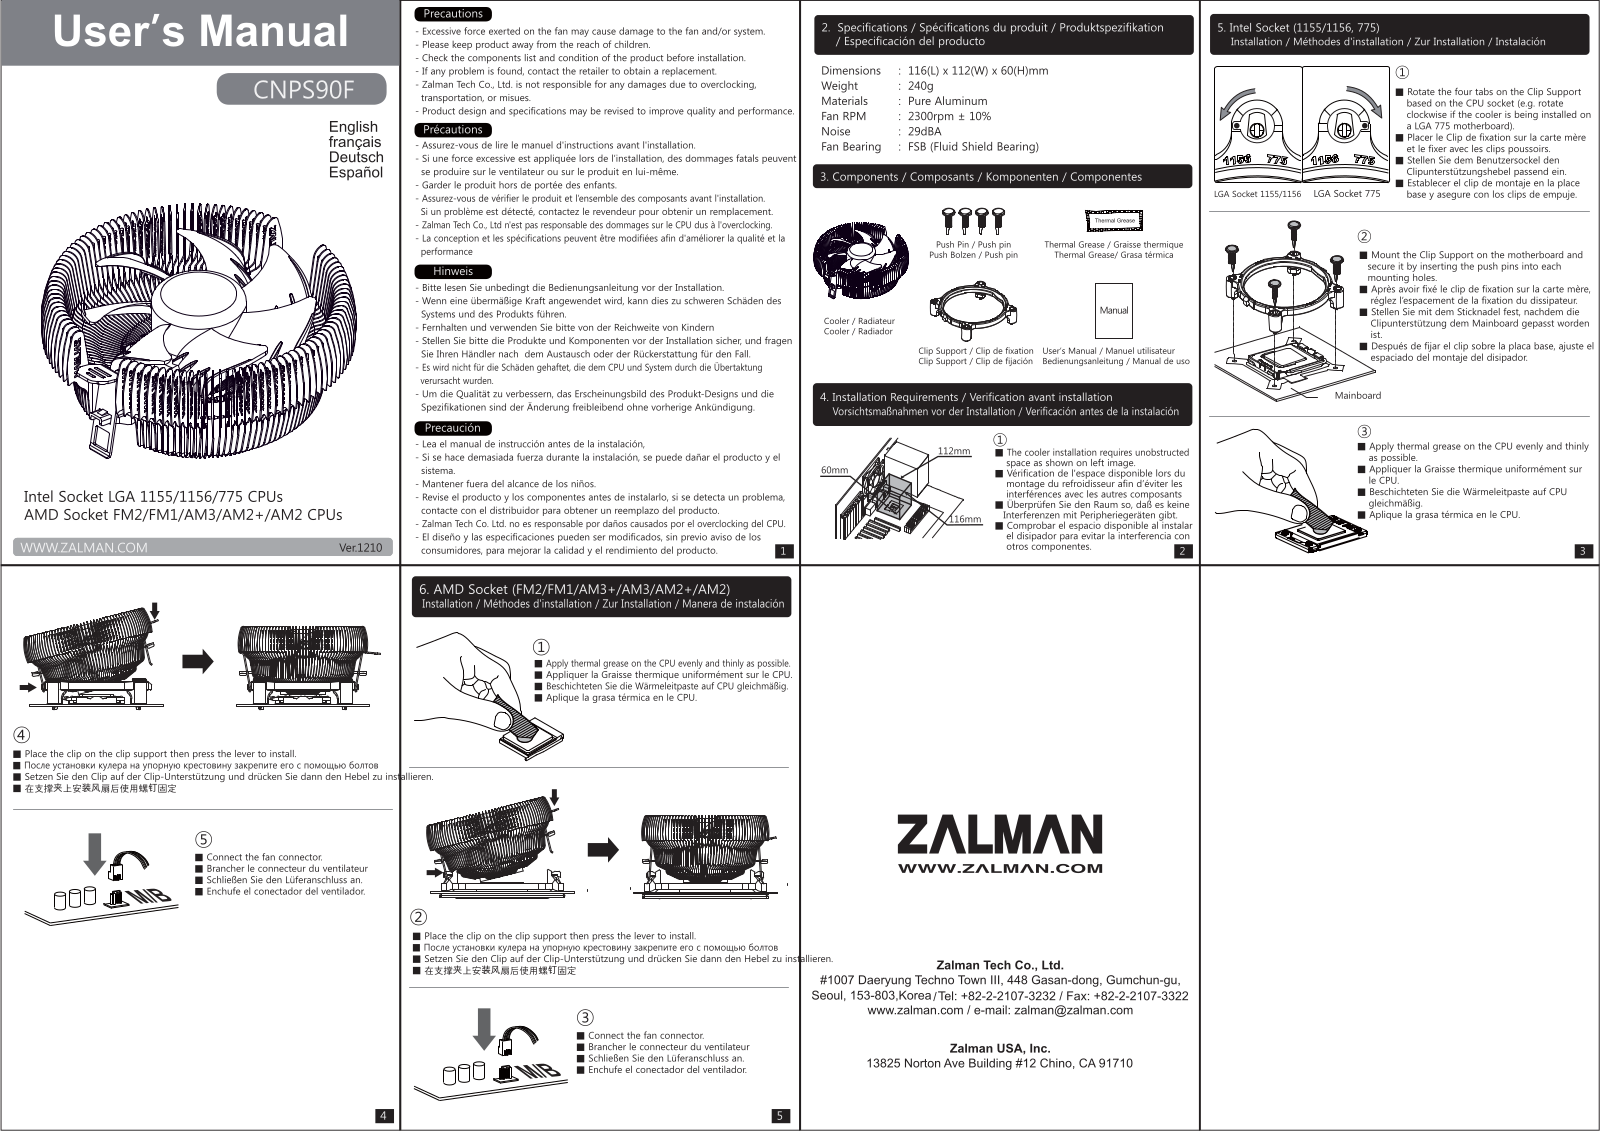 ZALMAN CNPS90F Manual